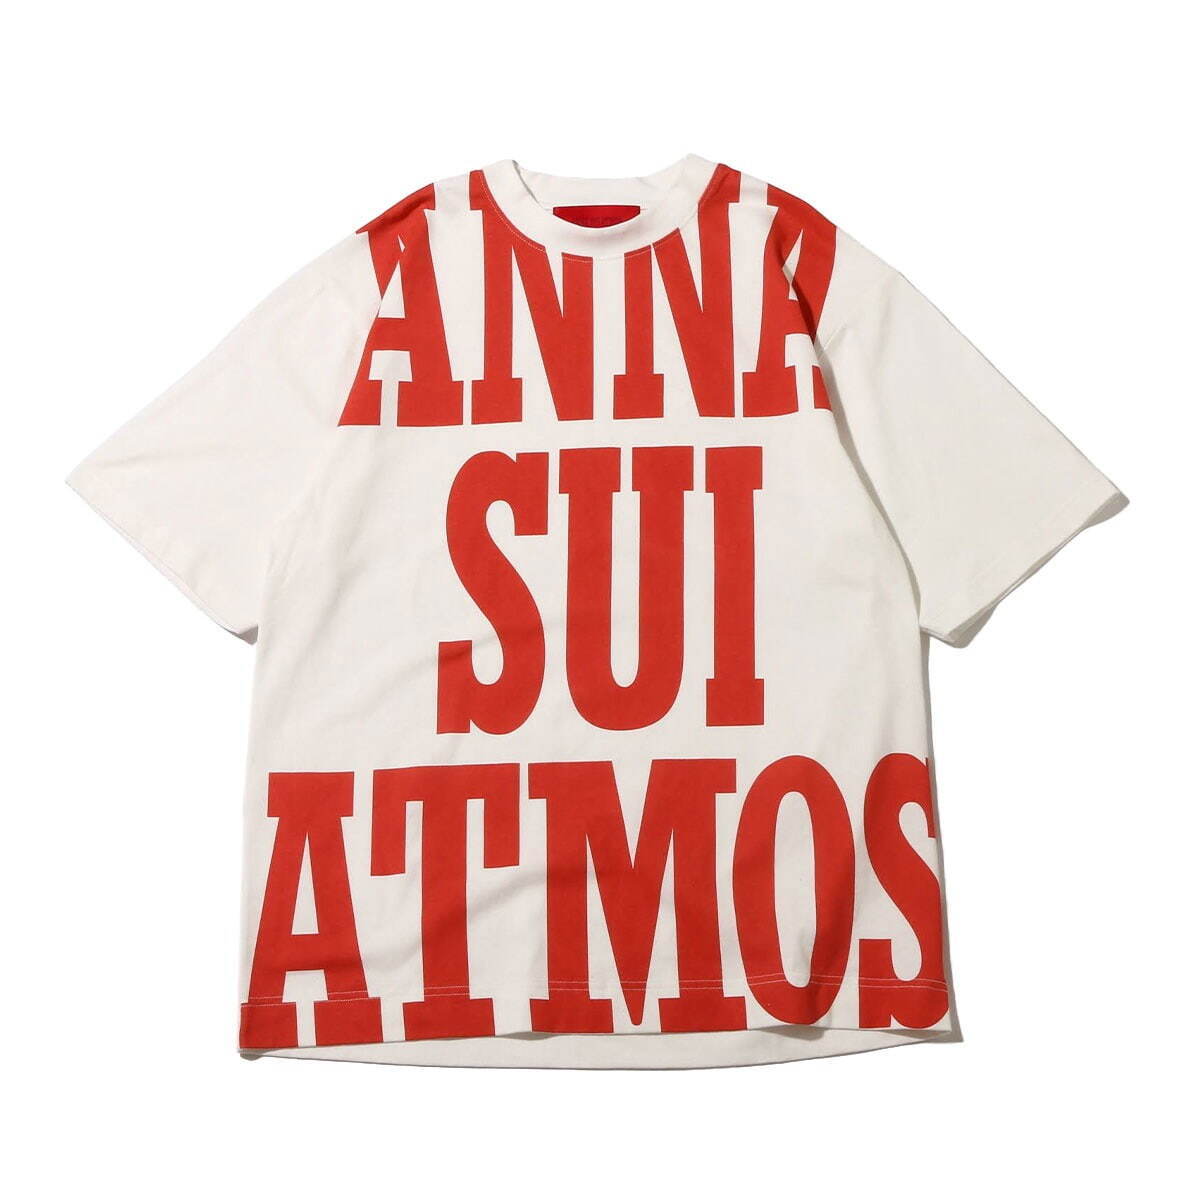 ANNA SUI ATMOS BIGロゴTshirt 6,050円